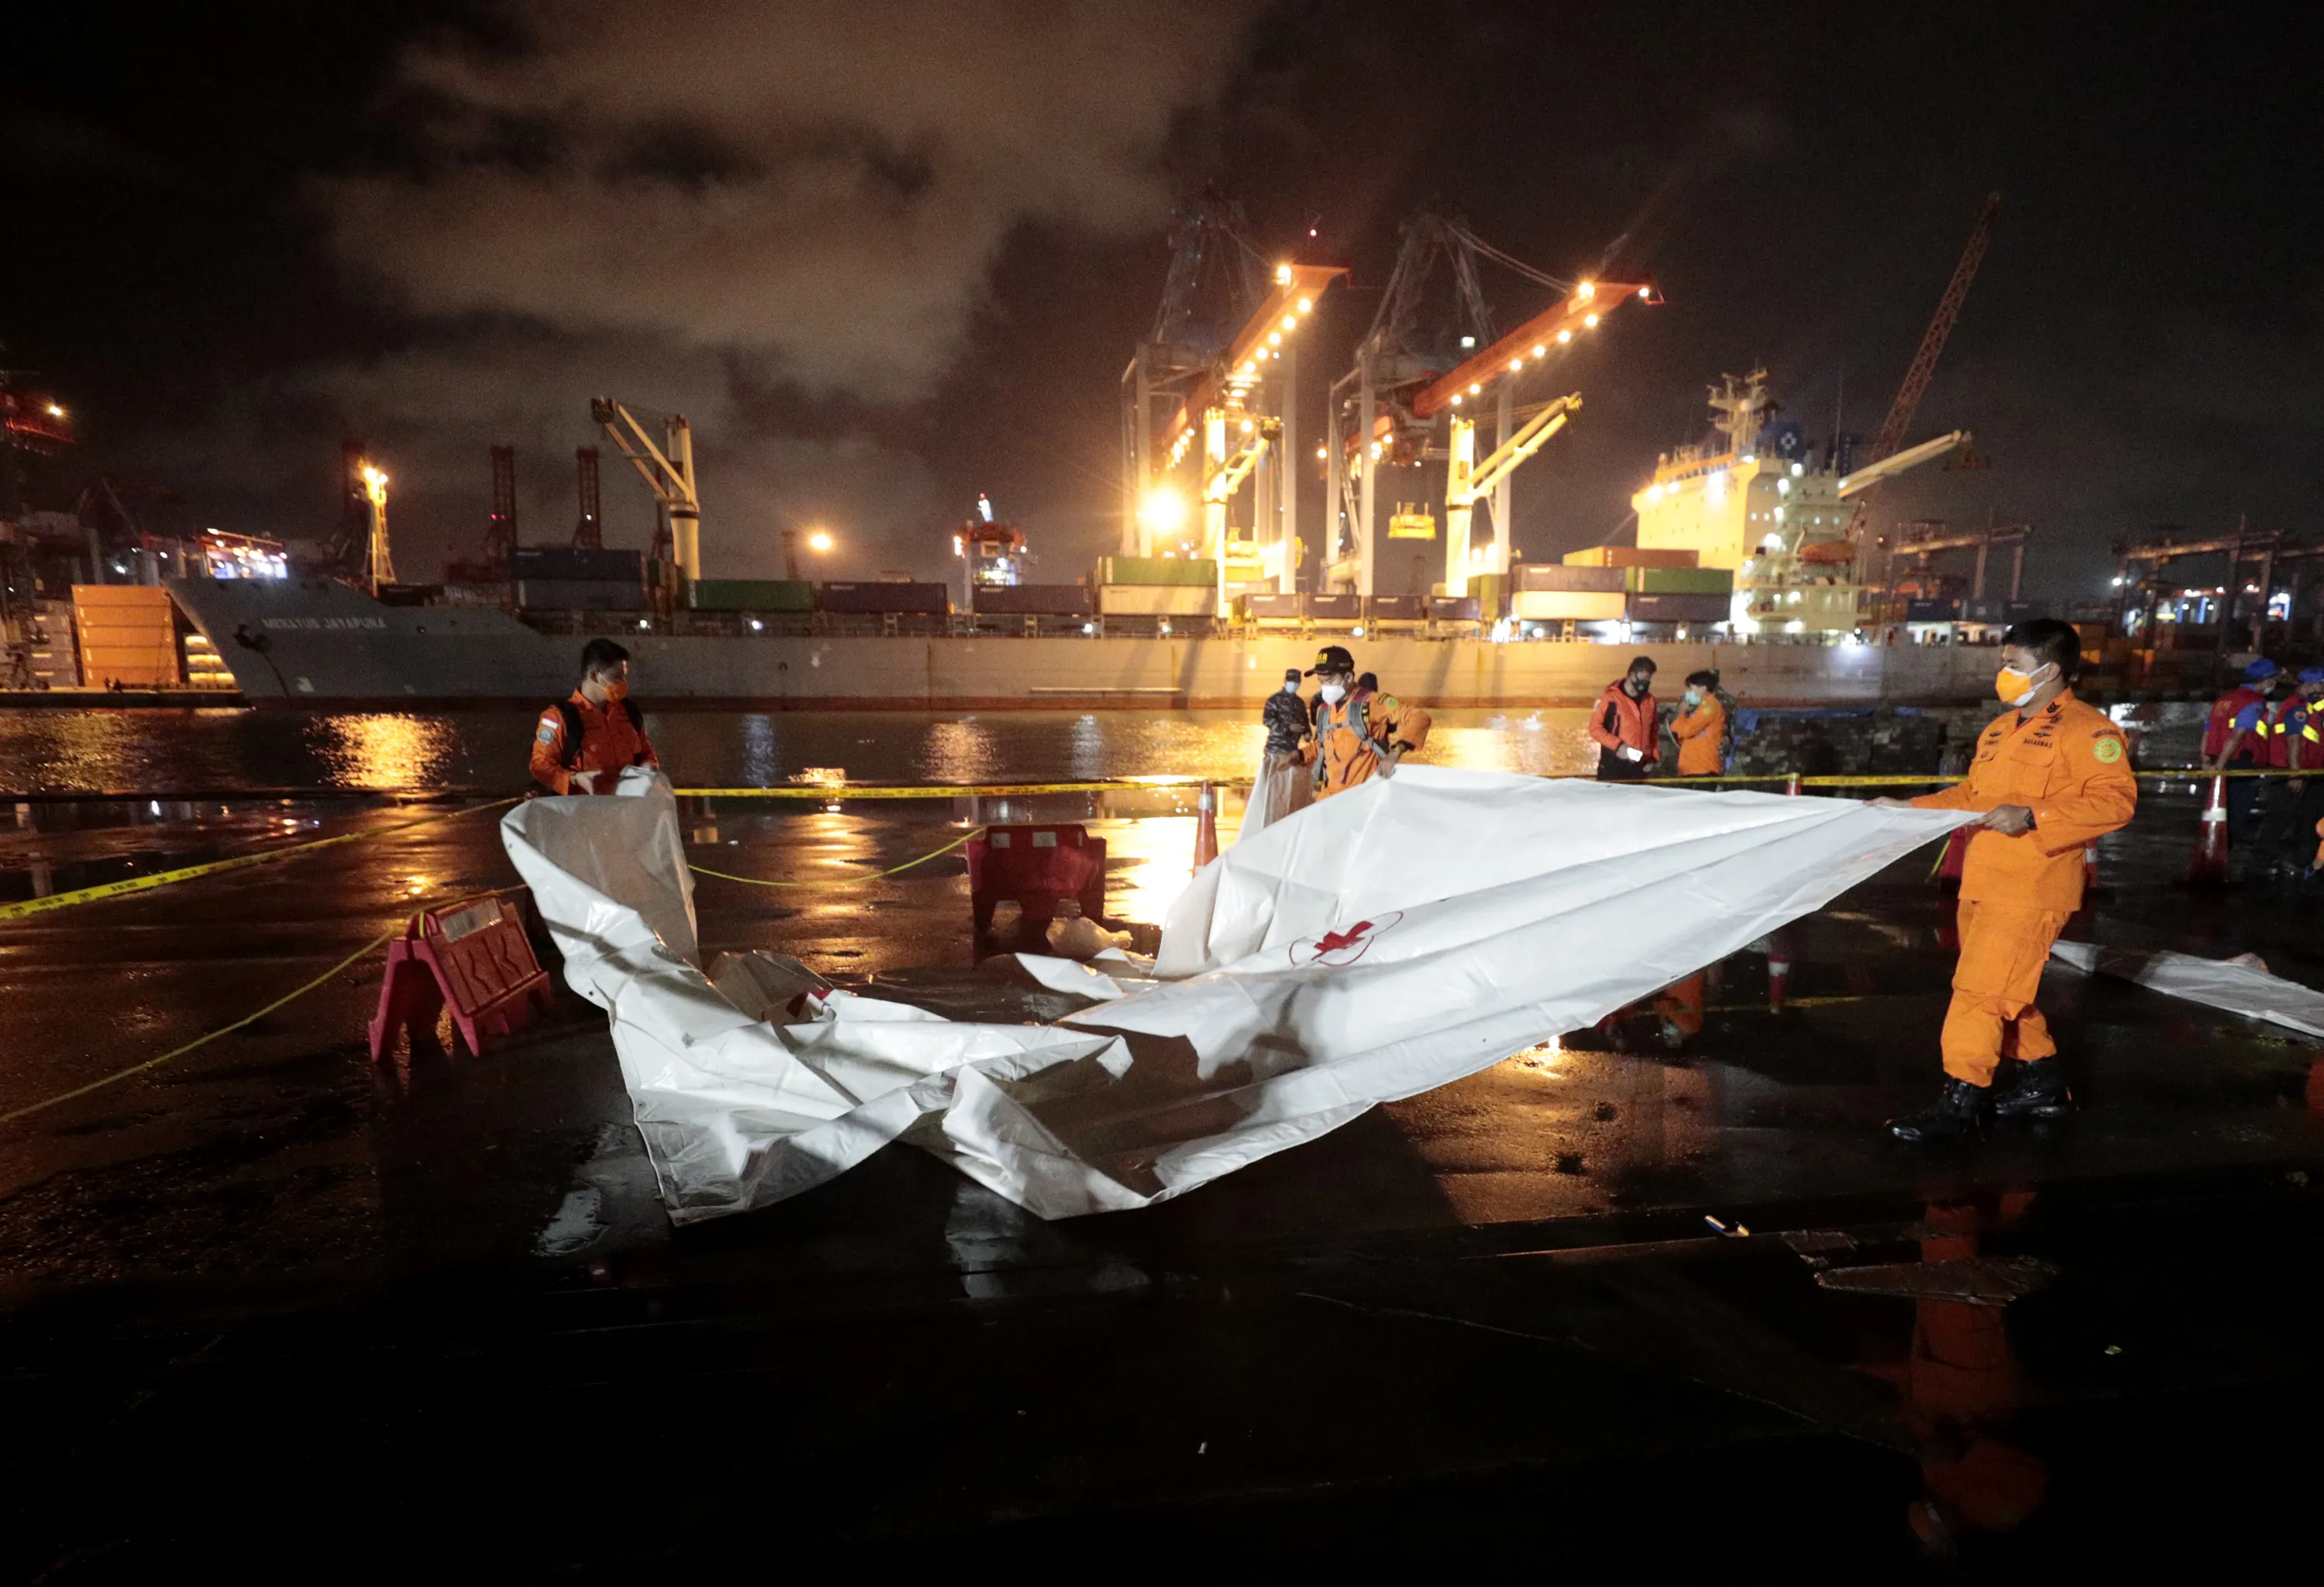 Авиакатастрофа море. Катастрофа Boeing 737 в Индонезии. Авиакатастрофа в Яванском море sj182. Авиакатастрофа Боинг 737 в 2021. Авиакатастрофа в Индонезии 2021.